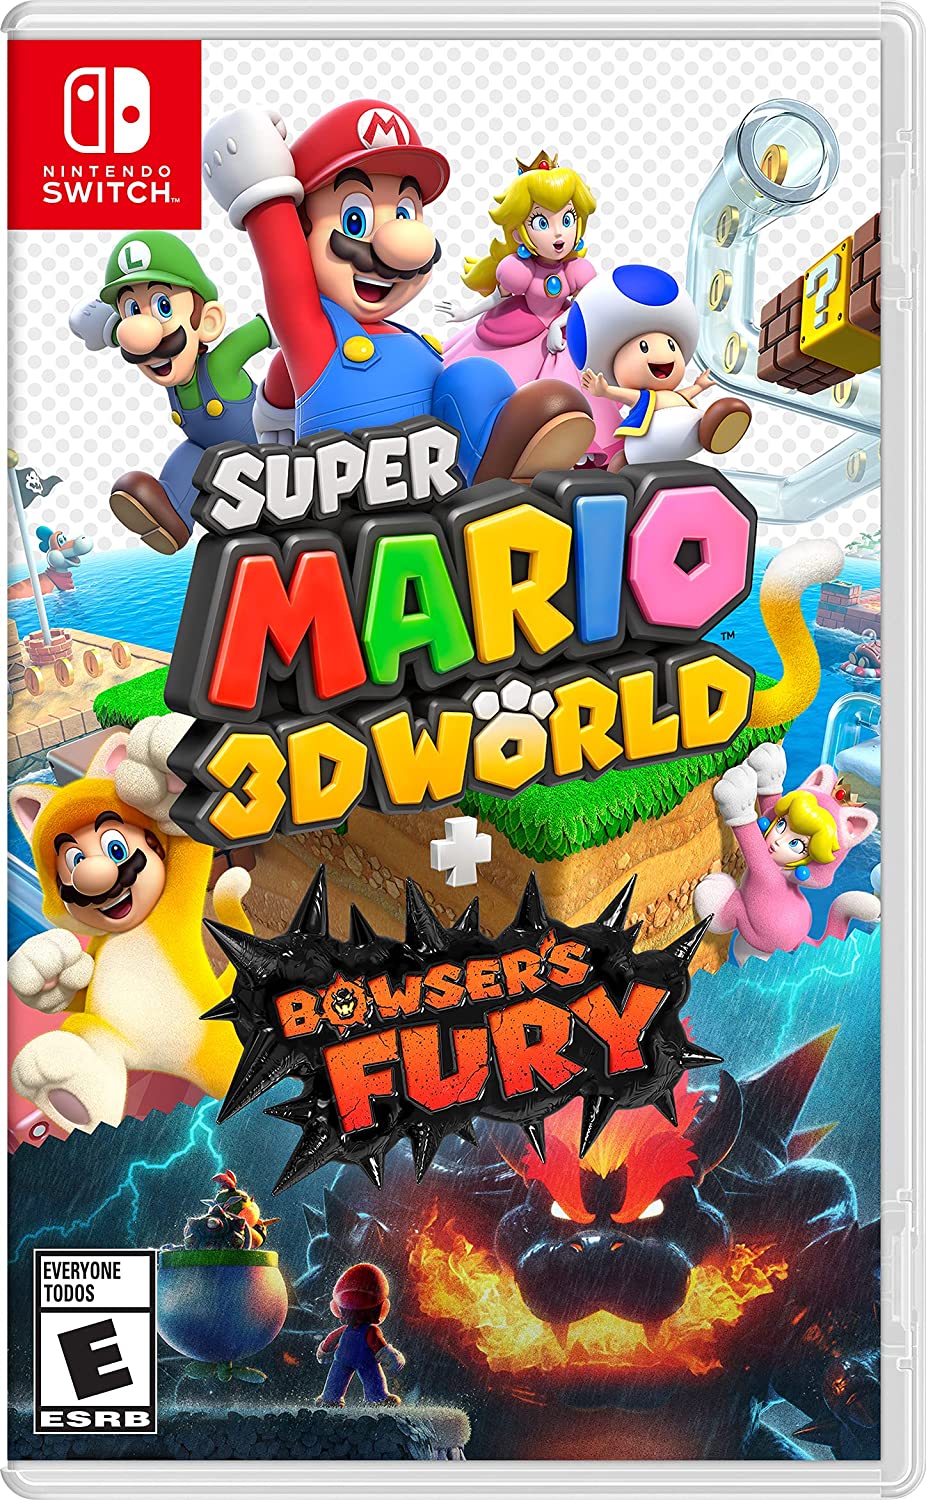 Super Mario 3D World   Bowser's Fury-Cover-Artwork für Nintendo Switch.